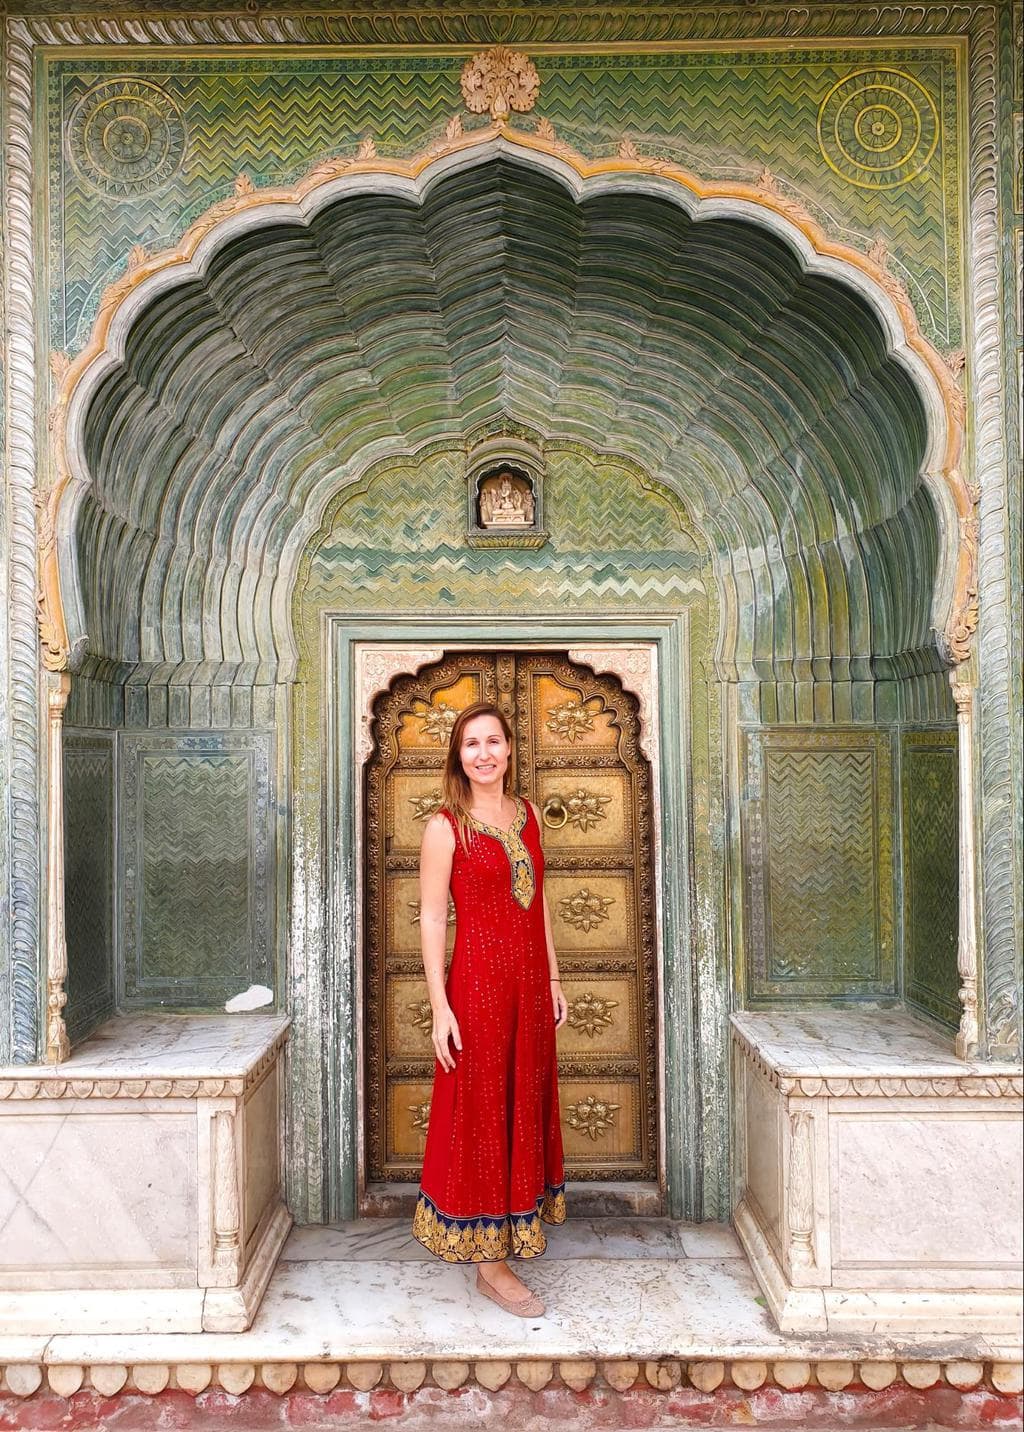 The beautiful gates at Jaipur’s City palace 01